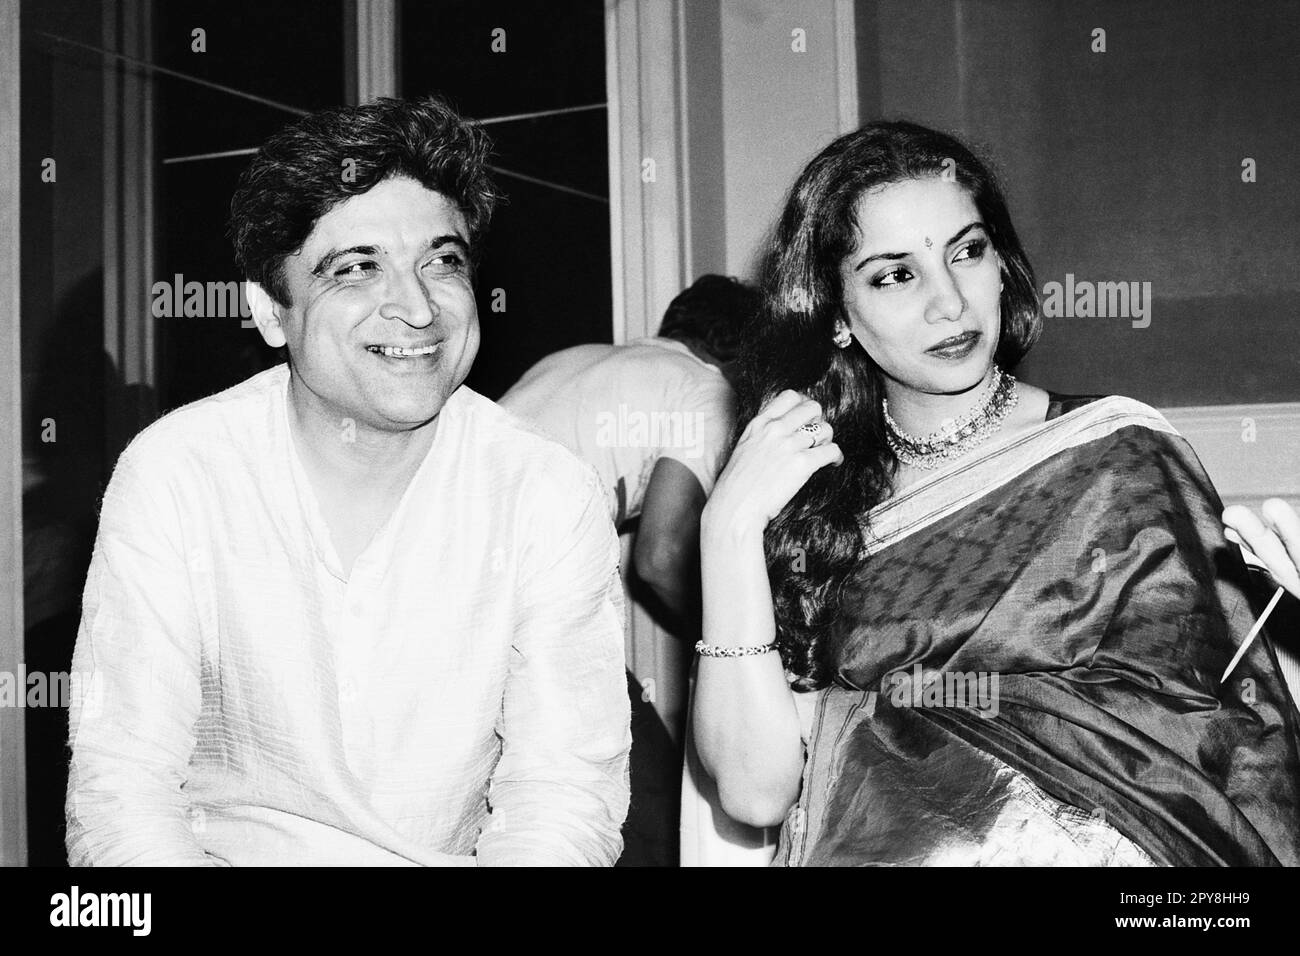 Vieux millésime indien 1980s noir et blanc bollywood cinéma hindi film acteur, Inde, Javed Akhtar, parolier indien, Shabana Azmi, Actrice indienne, Inde Banque D'Images